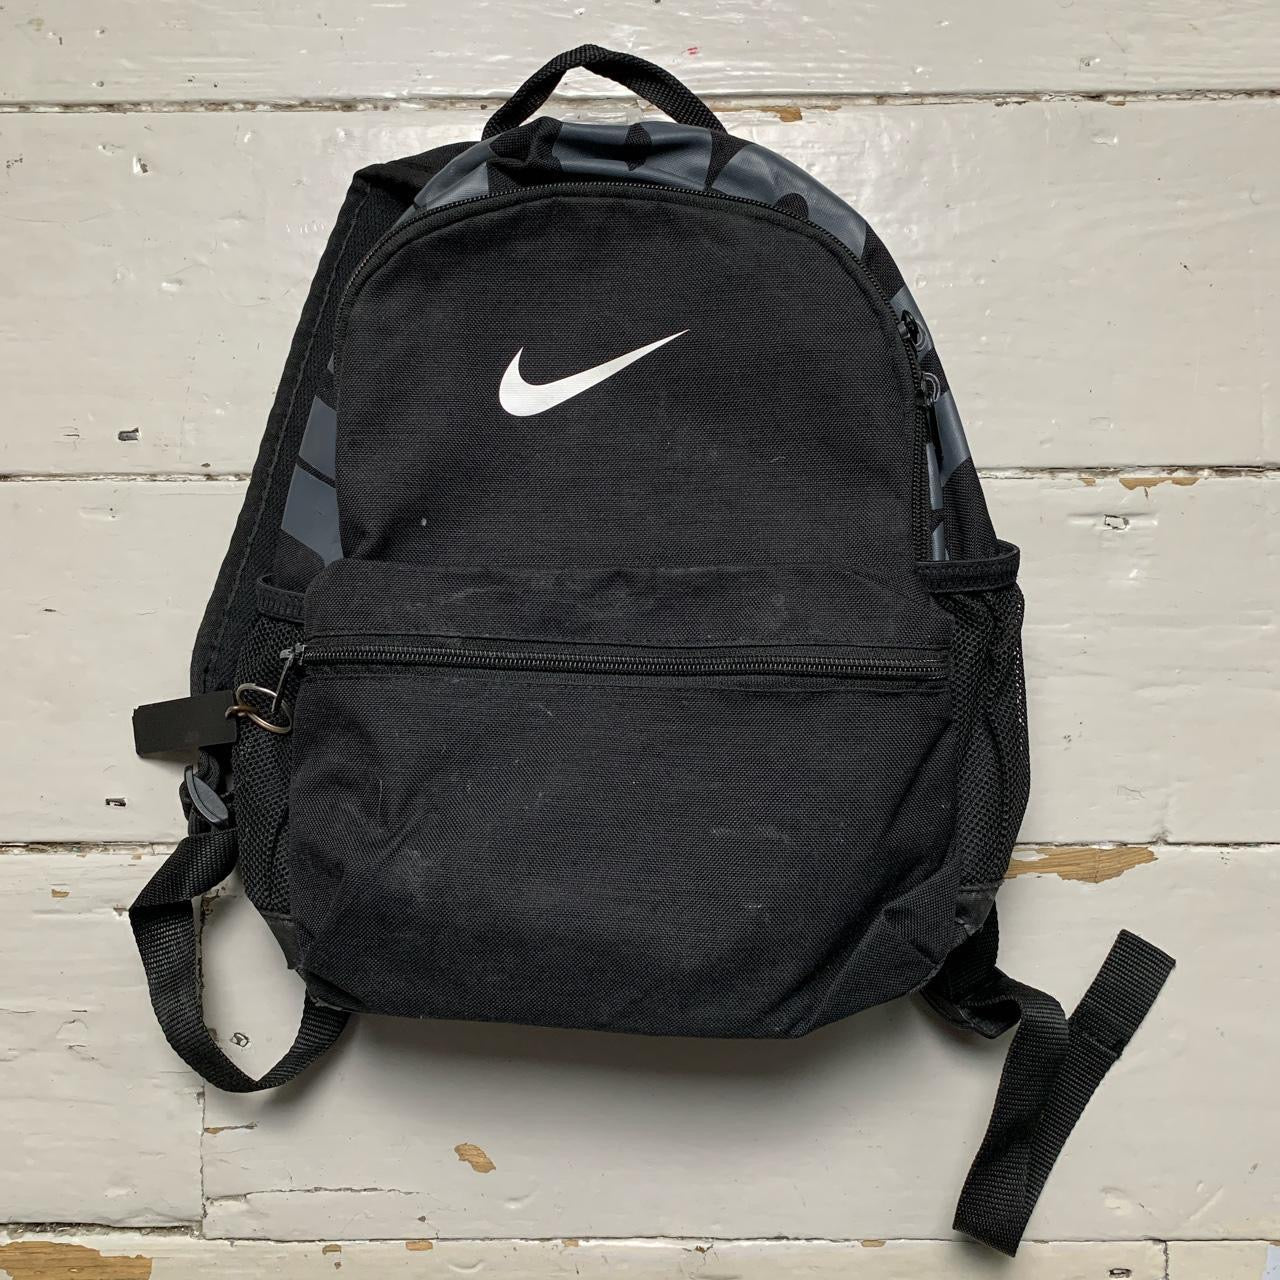 Nike Just Do It Bag Black